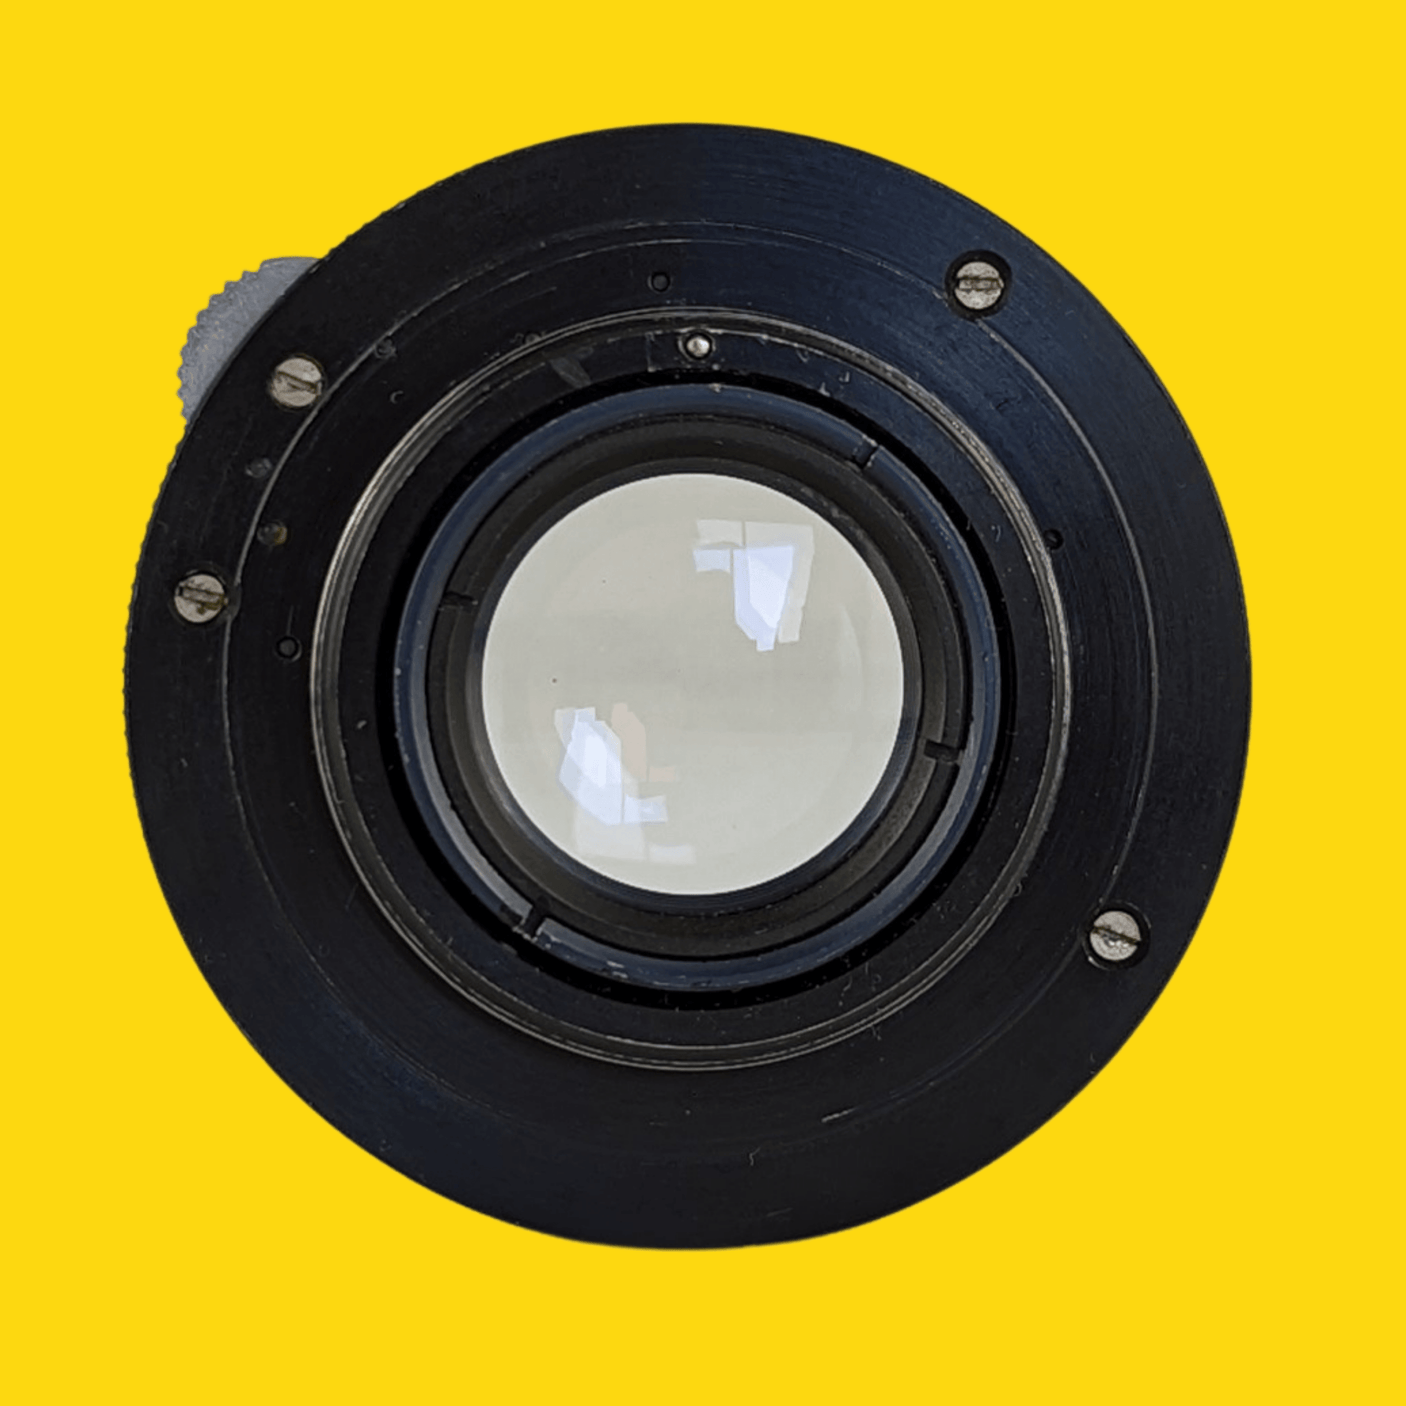 Helios-44M 58mm f/2 Camera Lens